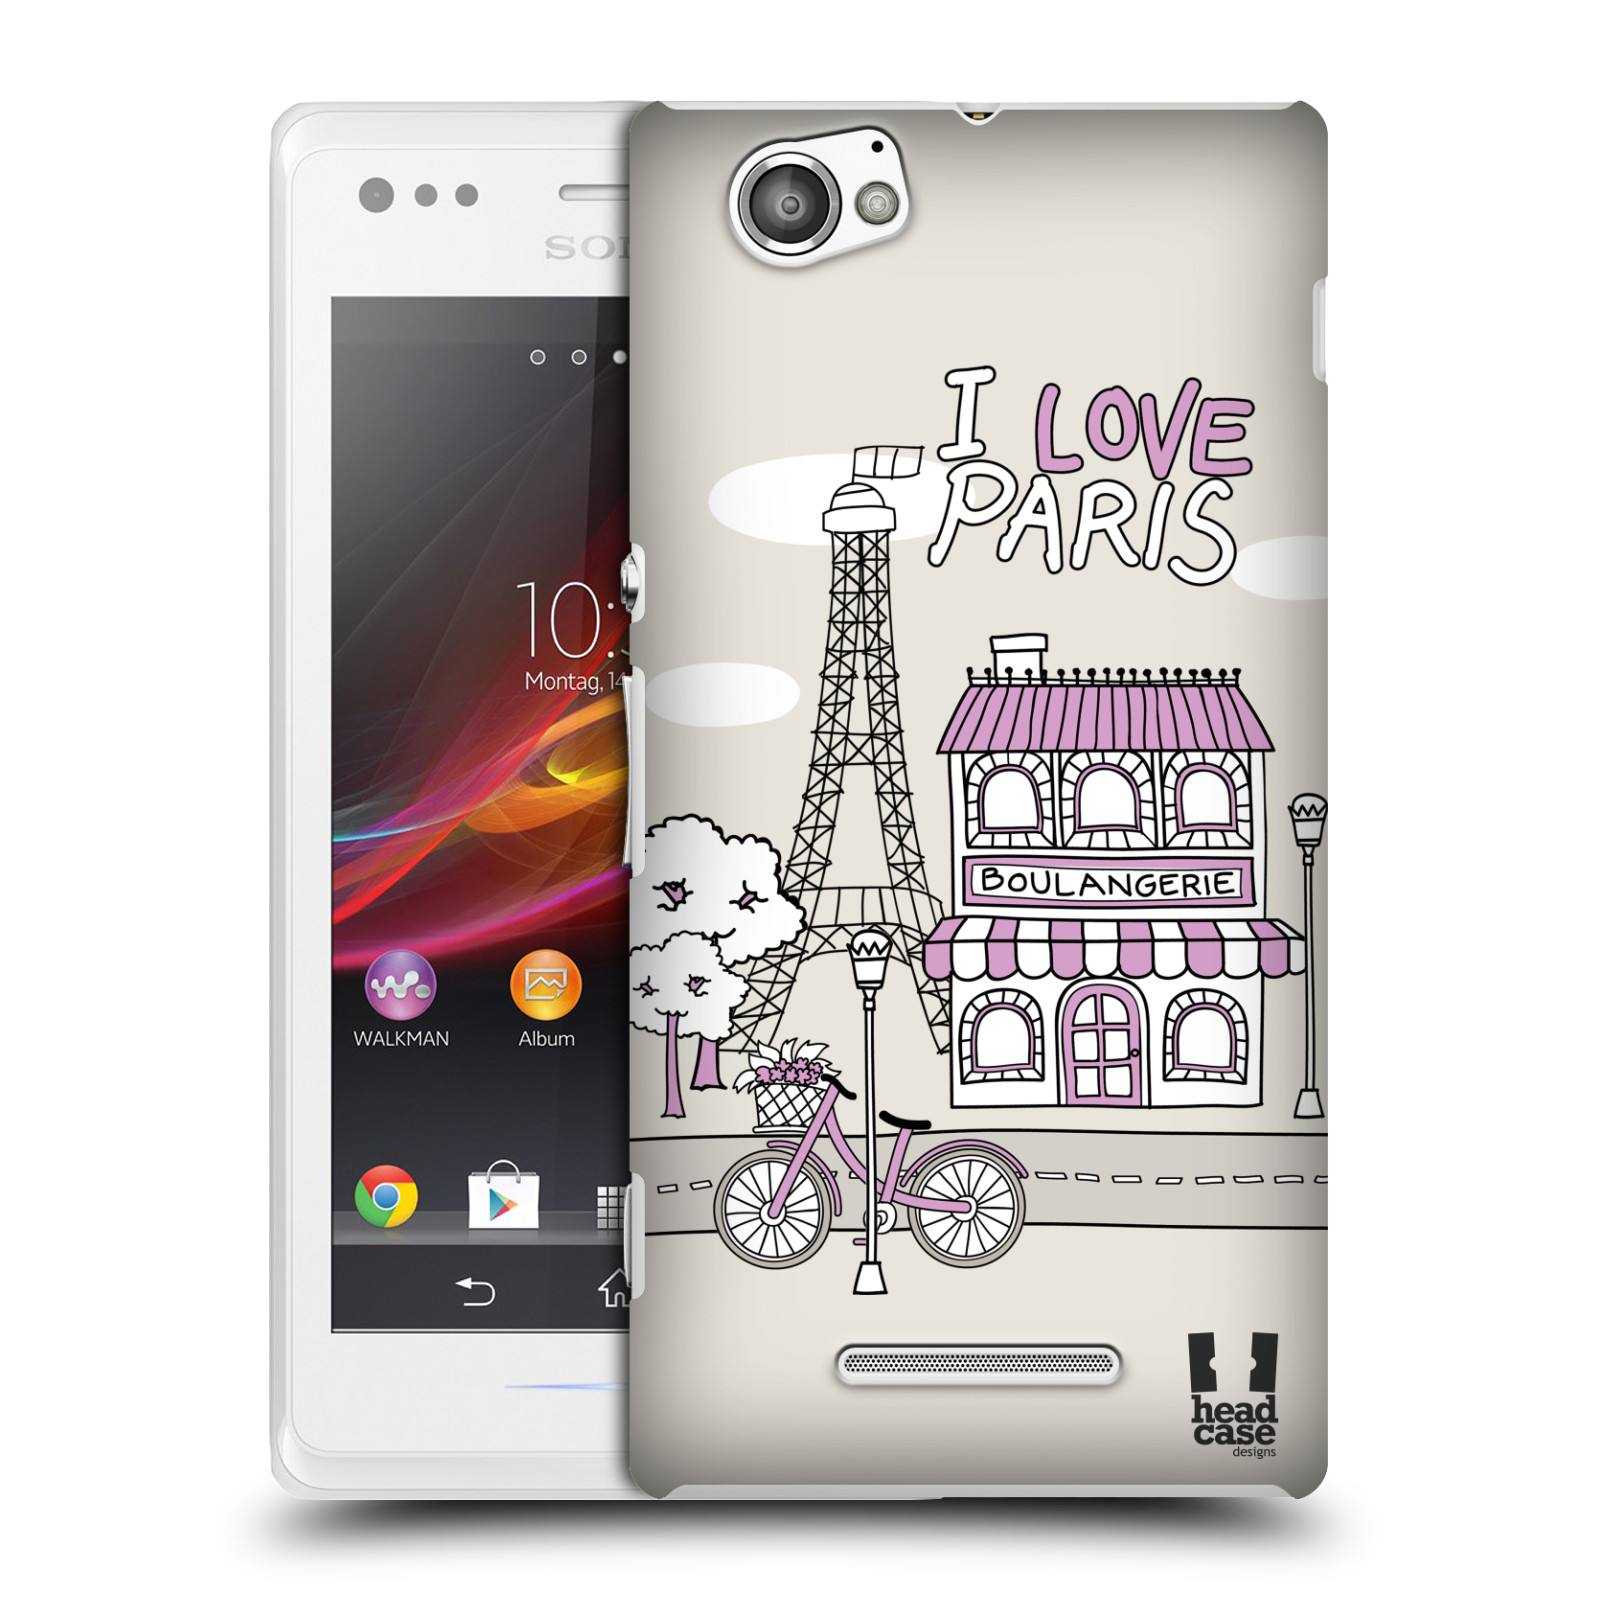 HEAD CASE plastový obal na mobil Sony Xperia M vzor Kreslená městečka FIALOVÁ, Paříž, Francie, I LOVE PARIS